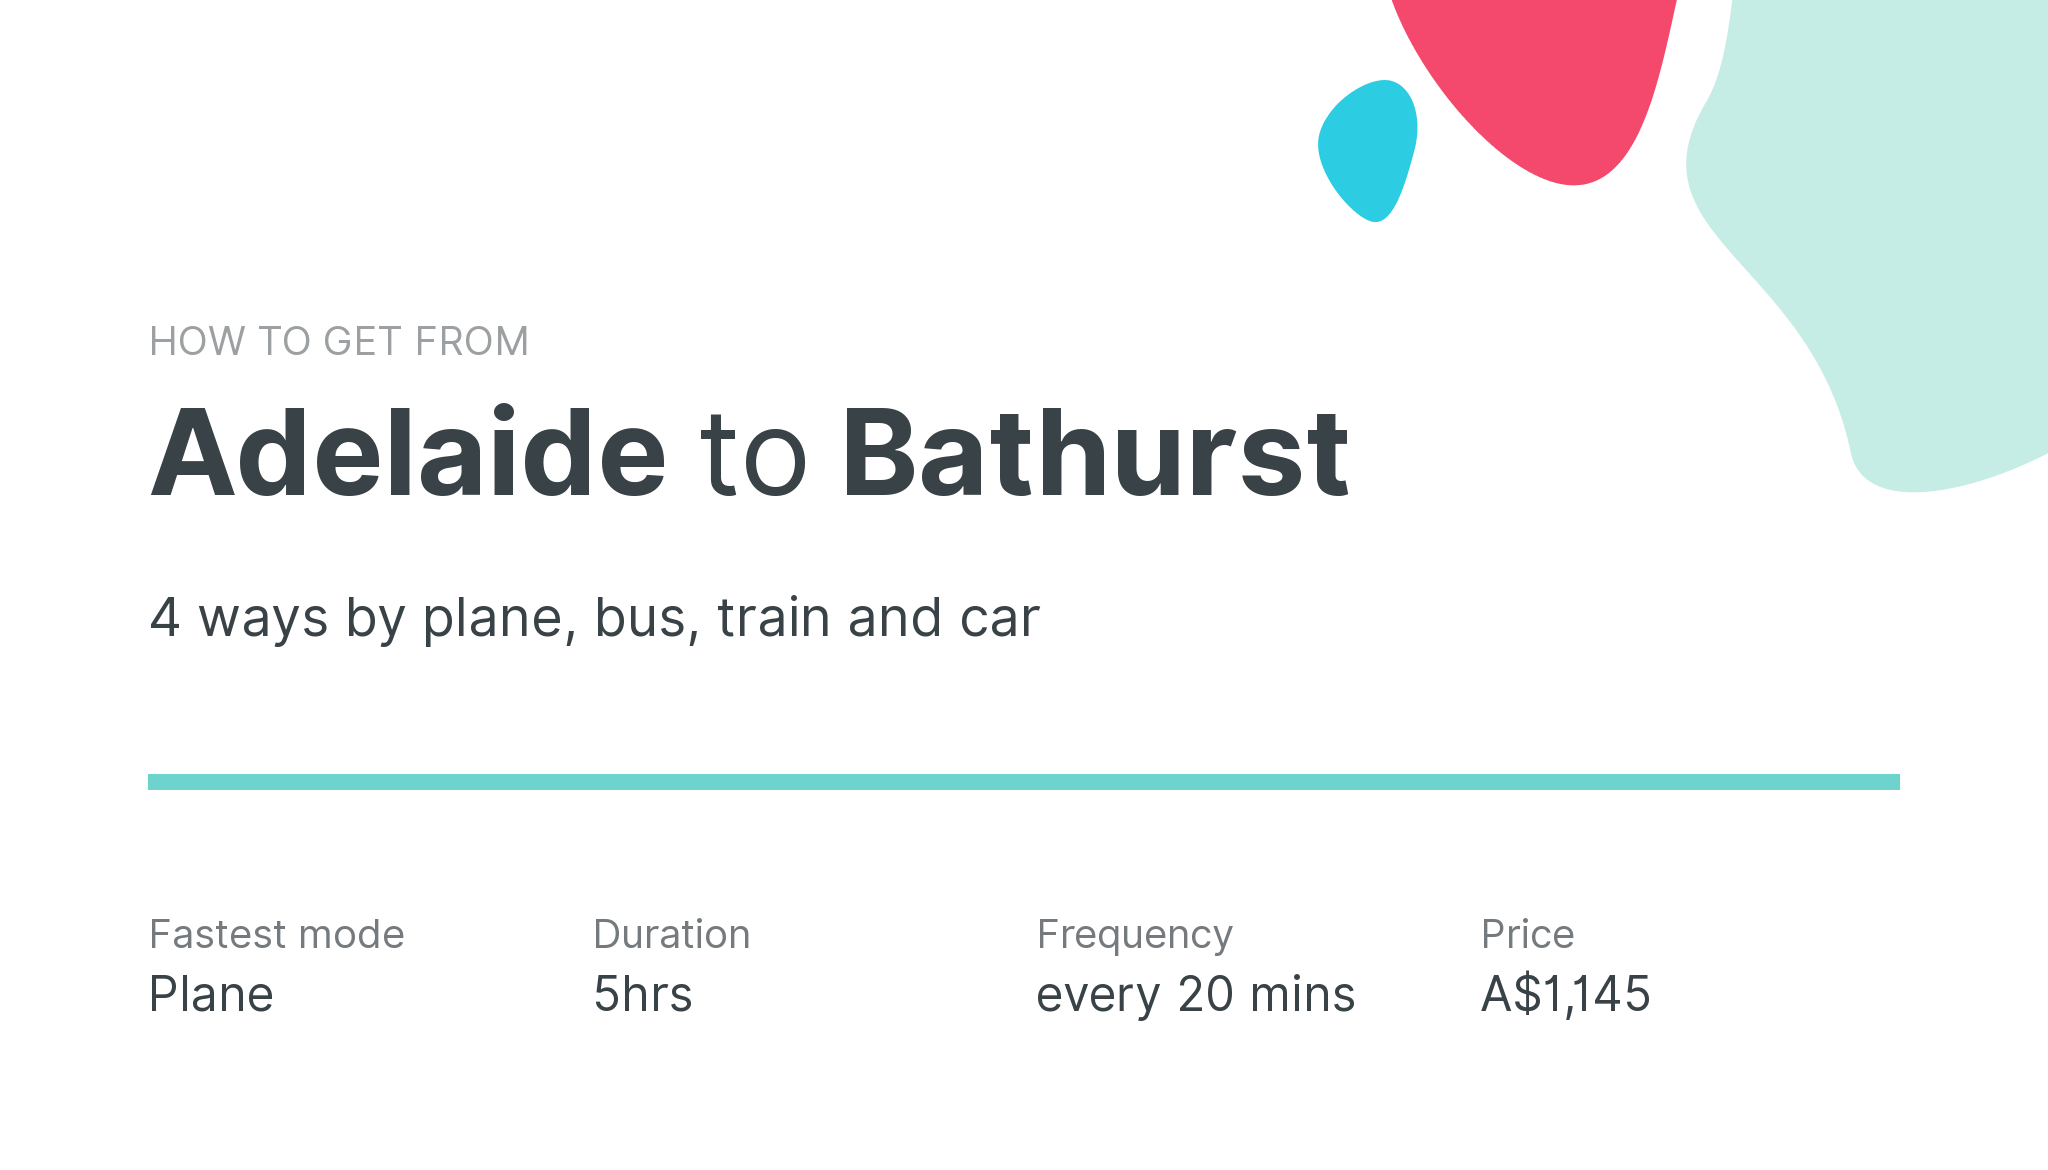 How do I get from Adelaide to Bathurst